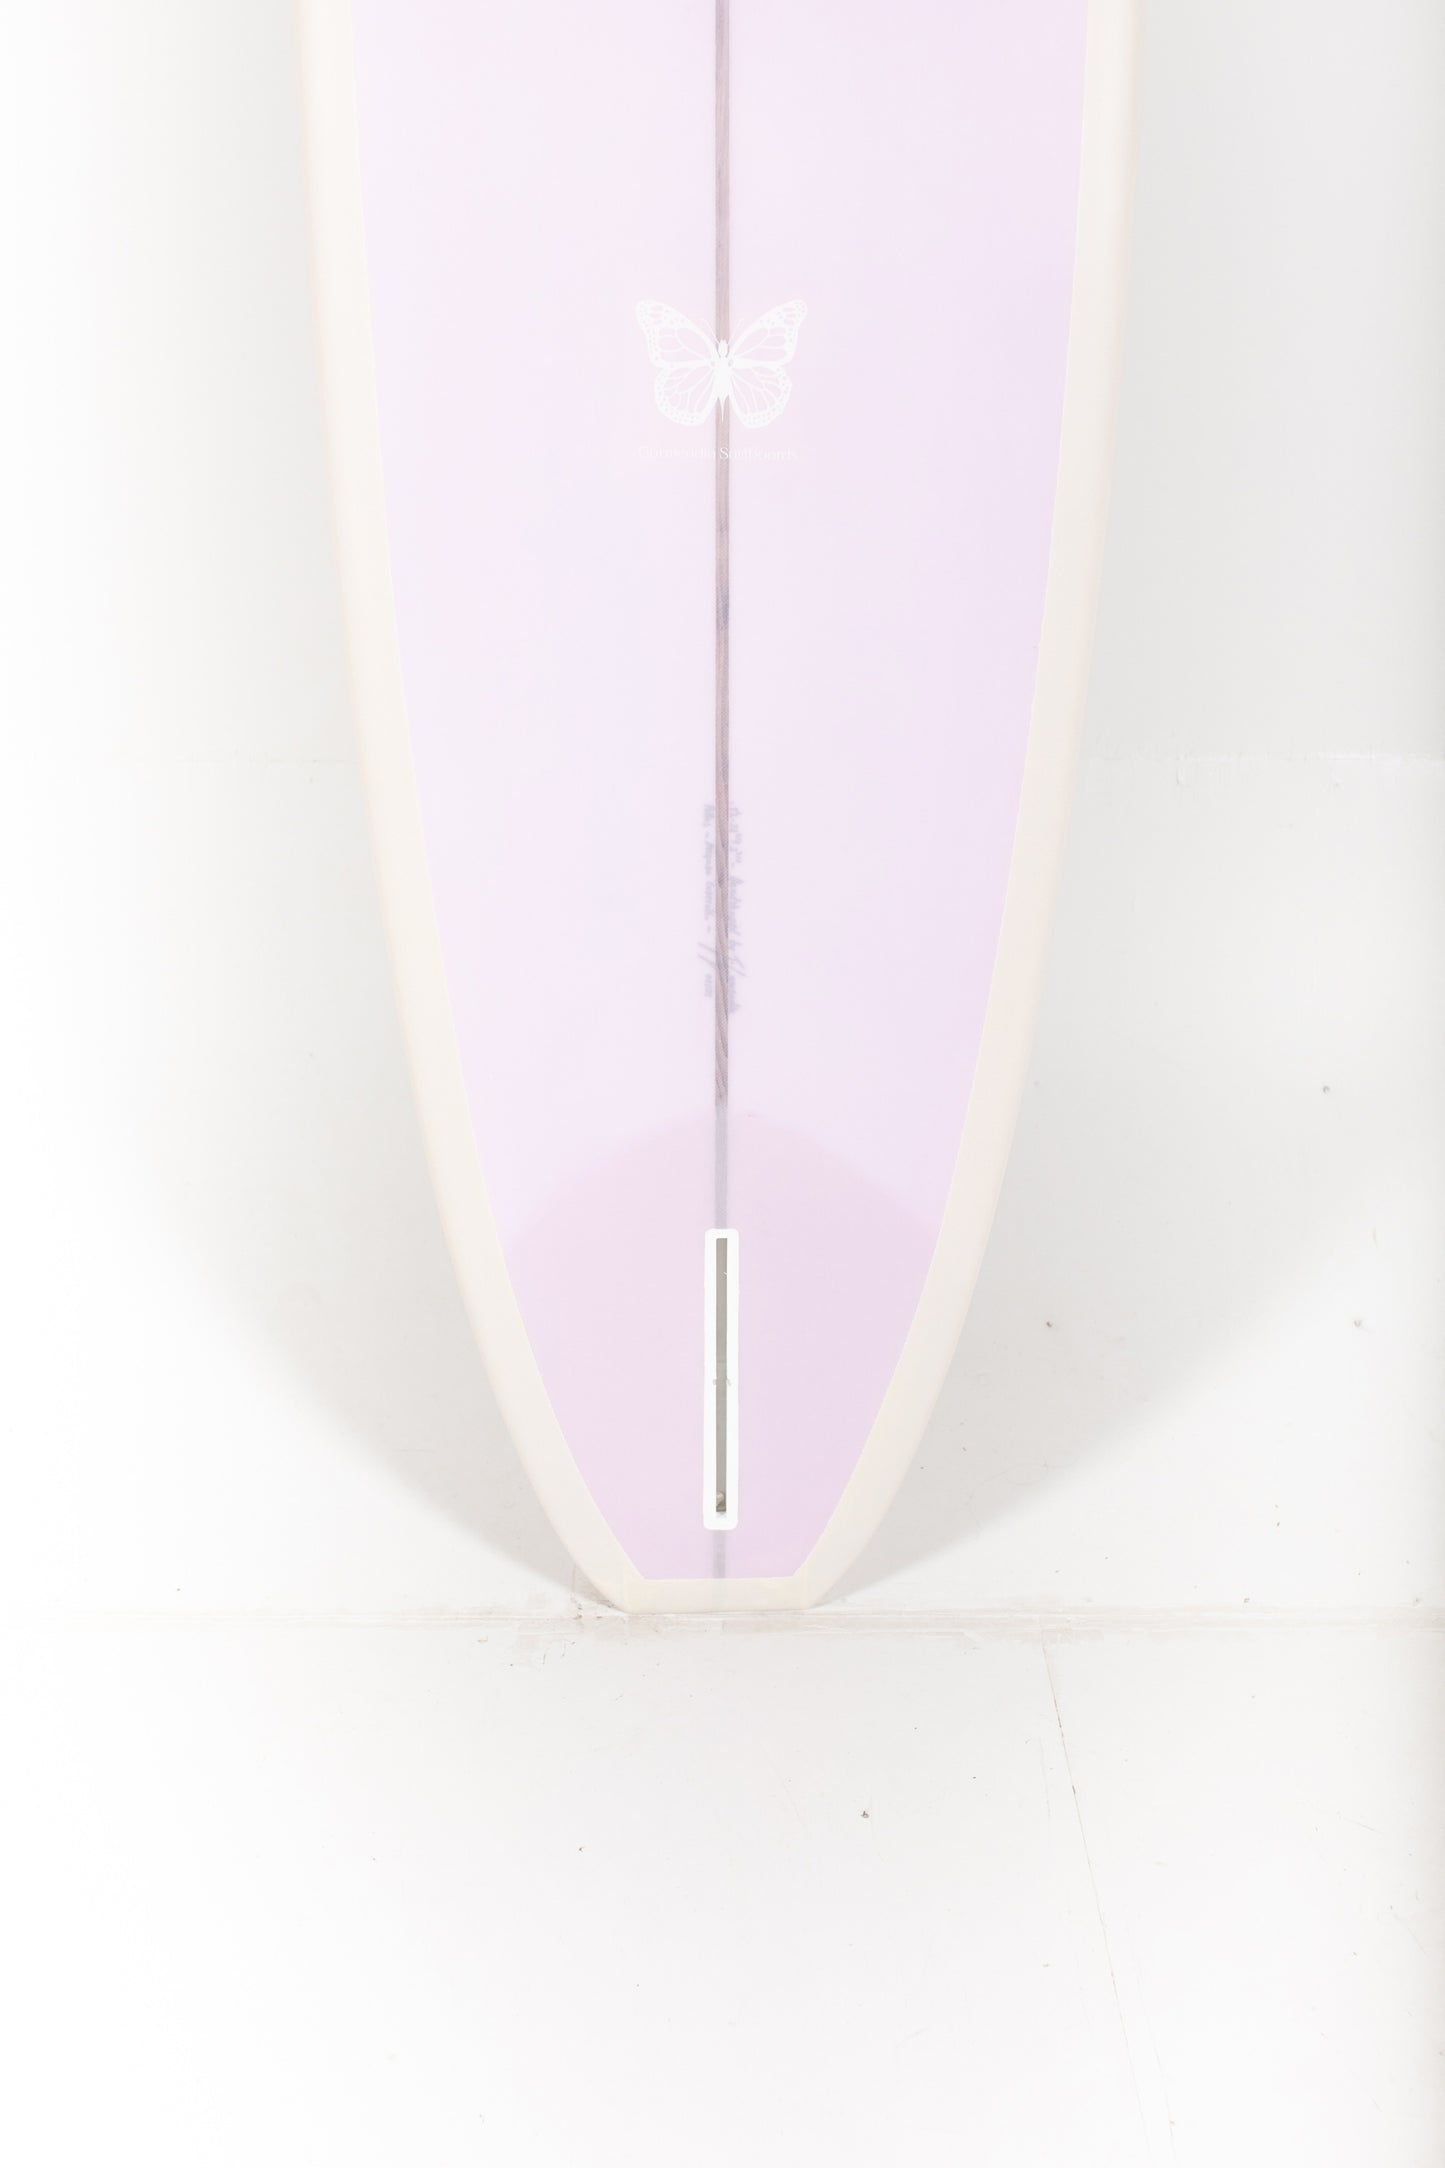 
                  
                    Pukas Surf Shop - Garmendia Surfboards - BULLET - 9’2” x 22 7/8 x 2 7/8 - Ref.GARMENBULLET9.2
                  
                